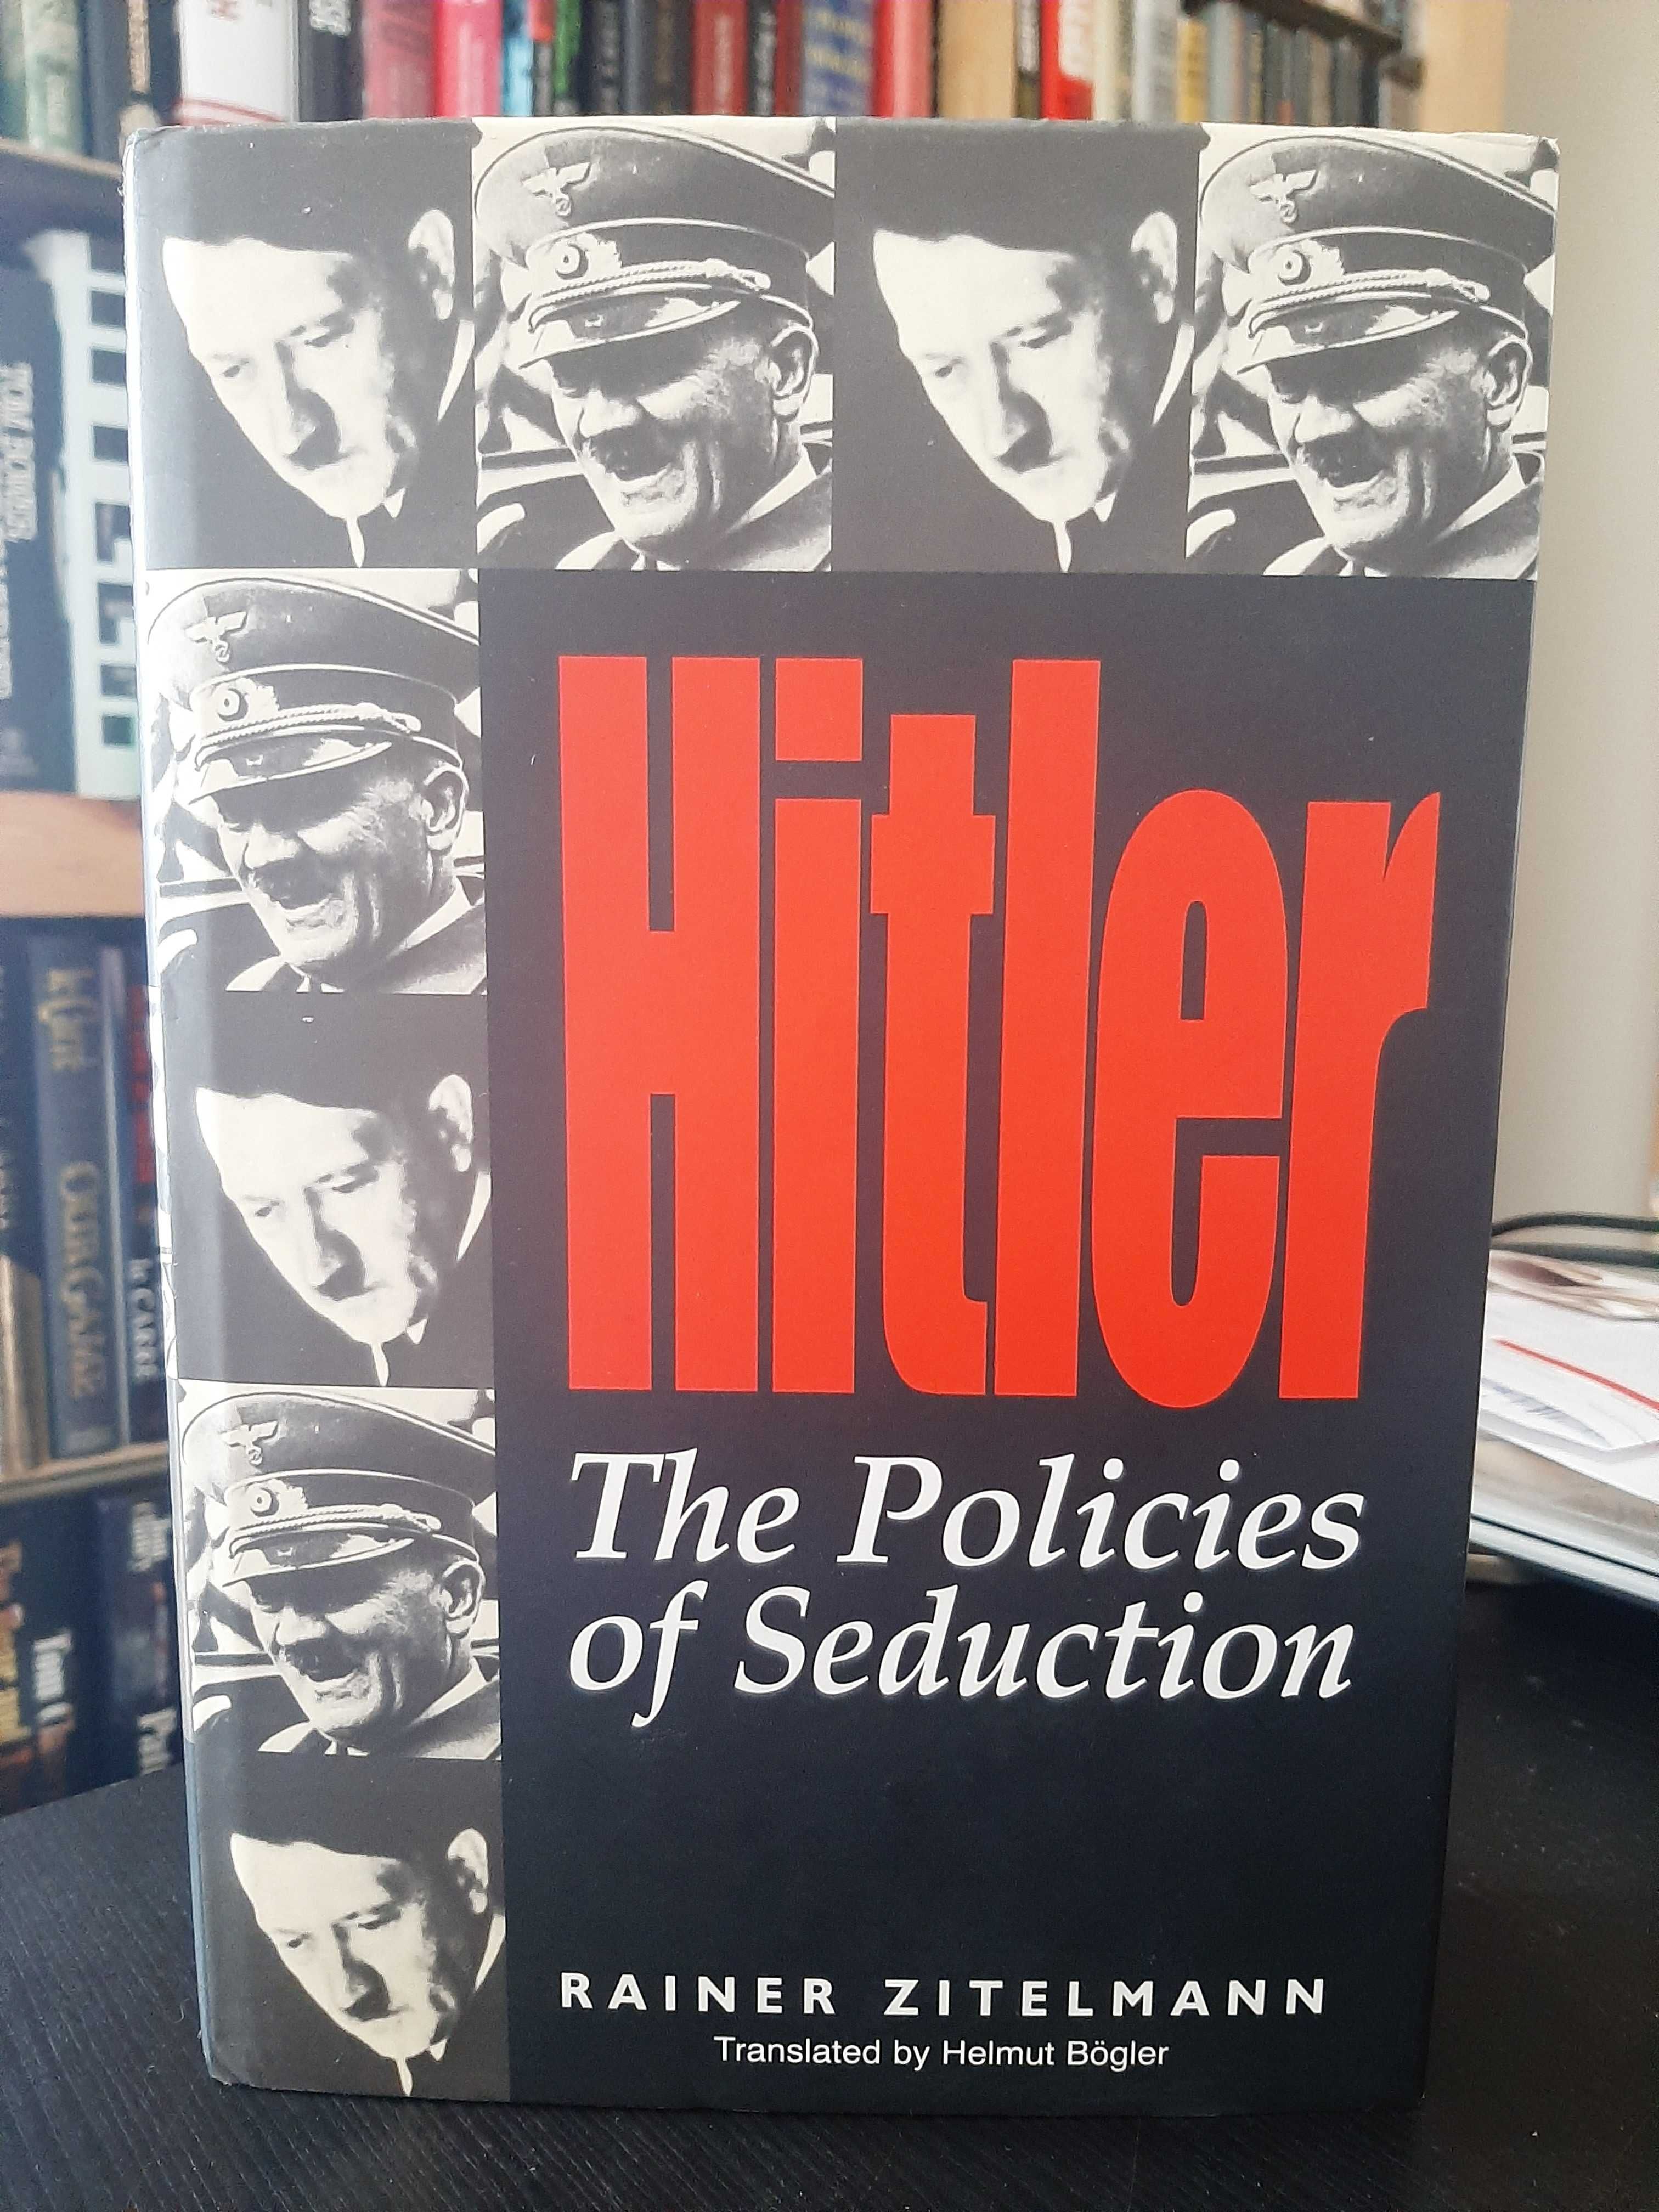 Rainer Zitelmann – Hitler: The Policies of Seduction